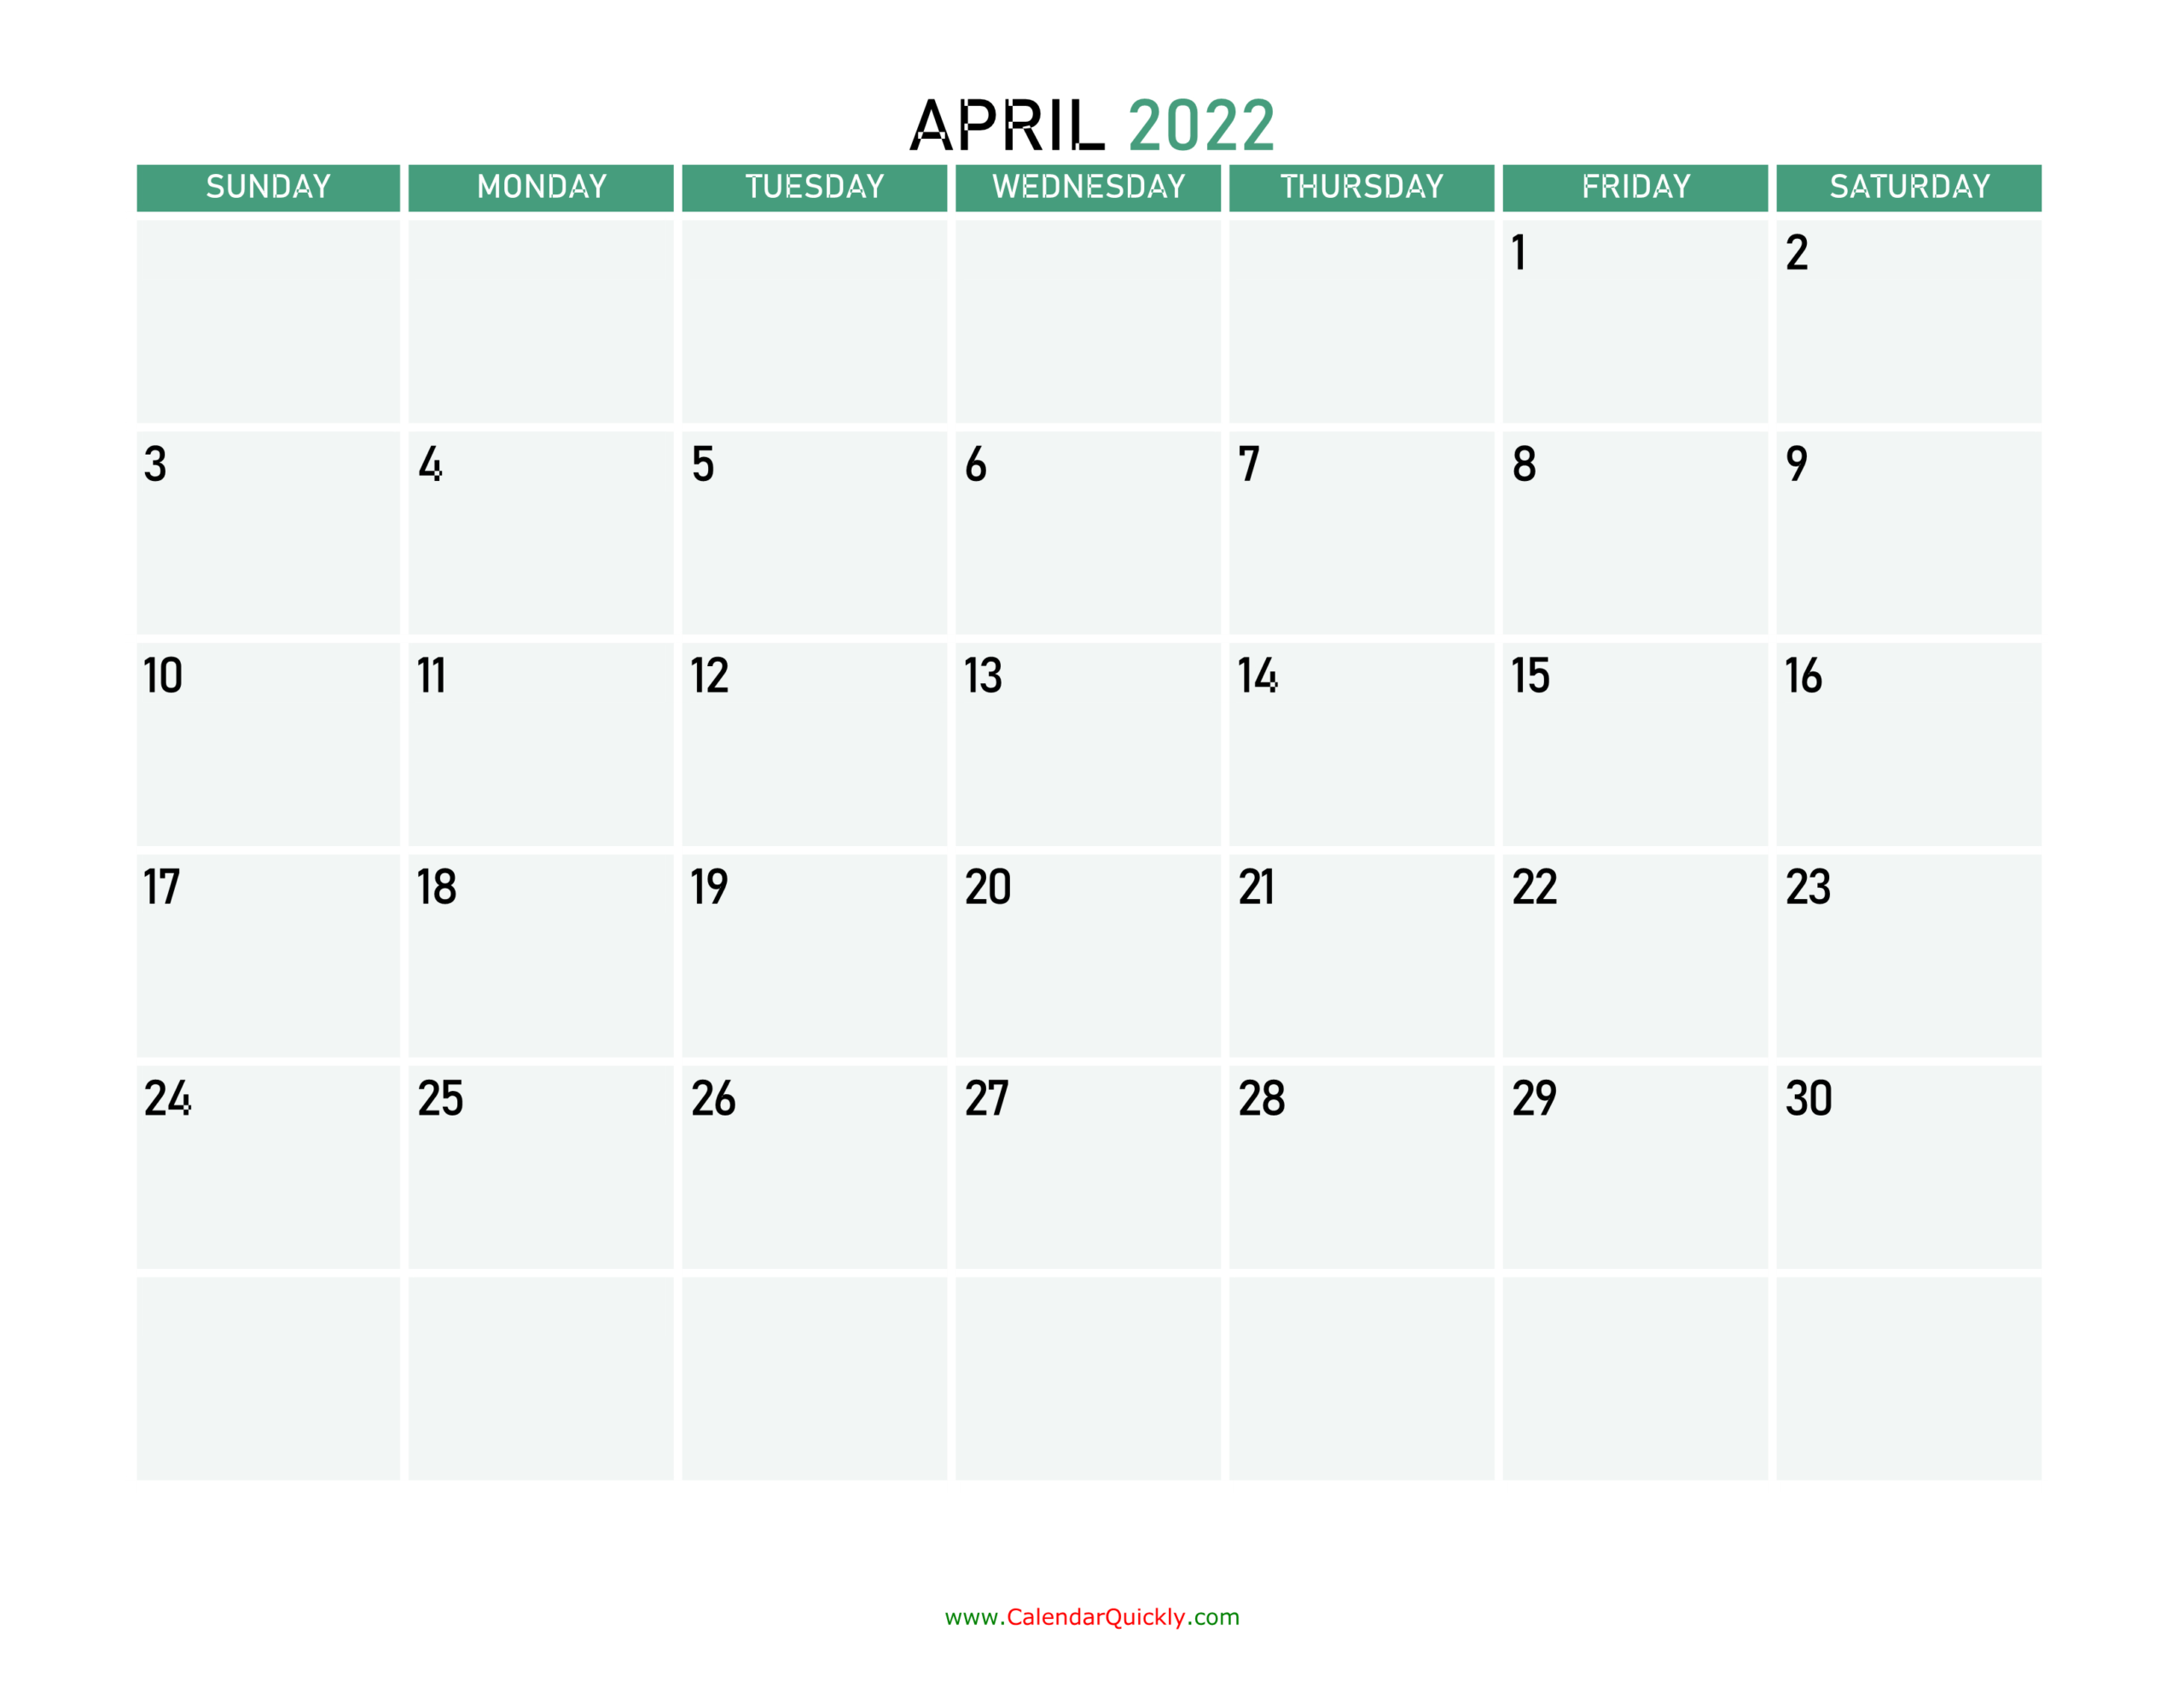 April 2022 Calendars | Calendar Quickly  2022 Calendar Printable April